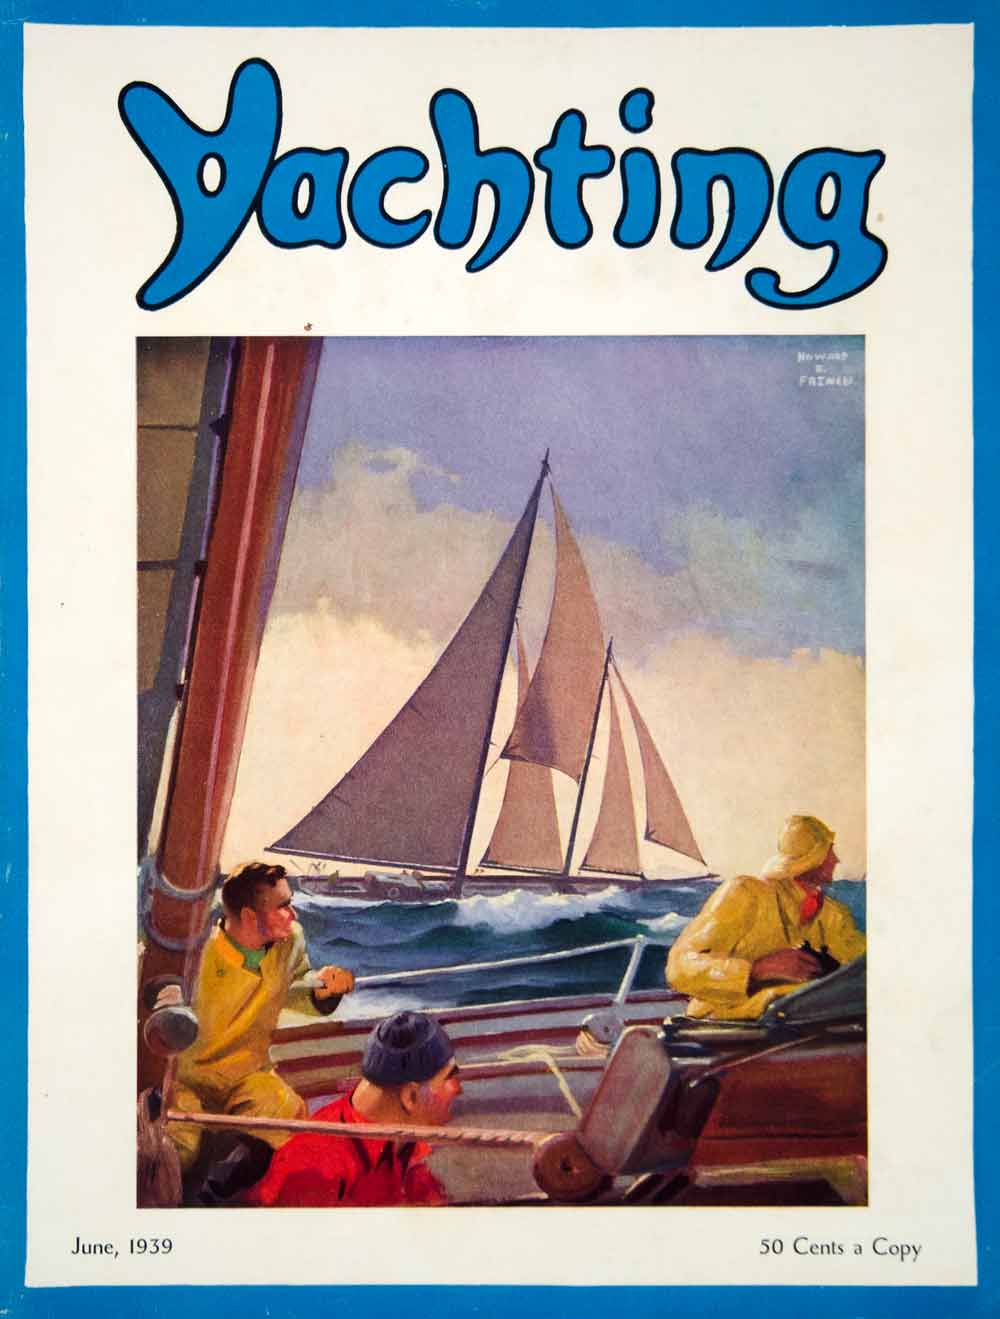 1939 Cover Yachting Magazine June Yacht Sailboat Crew Deck Sailors Racing Race